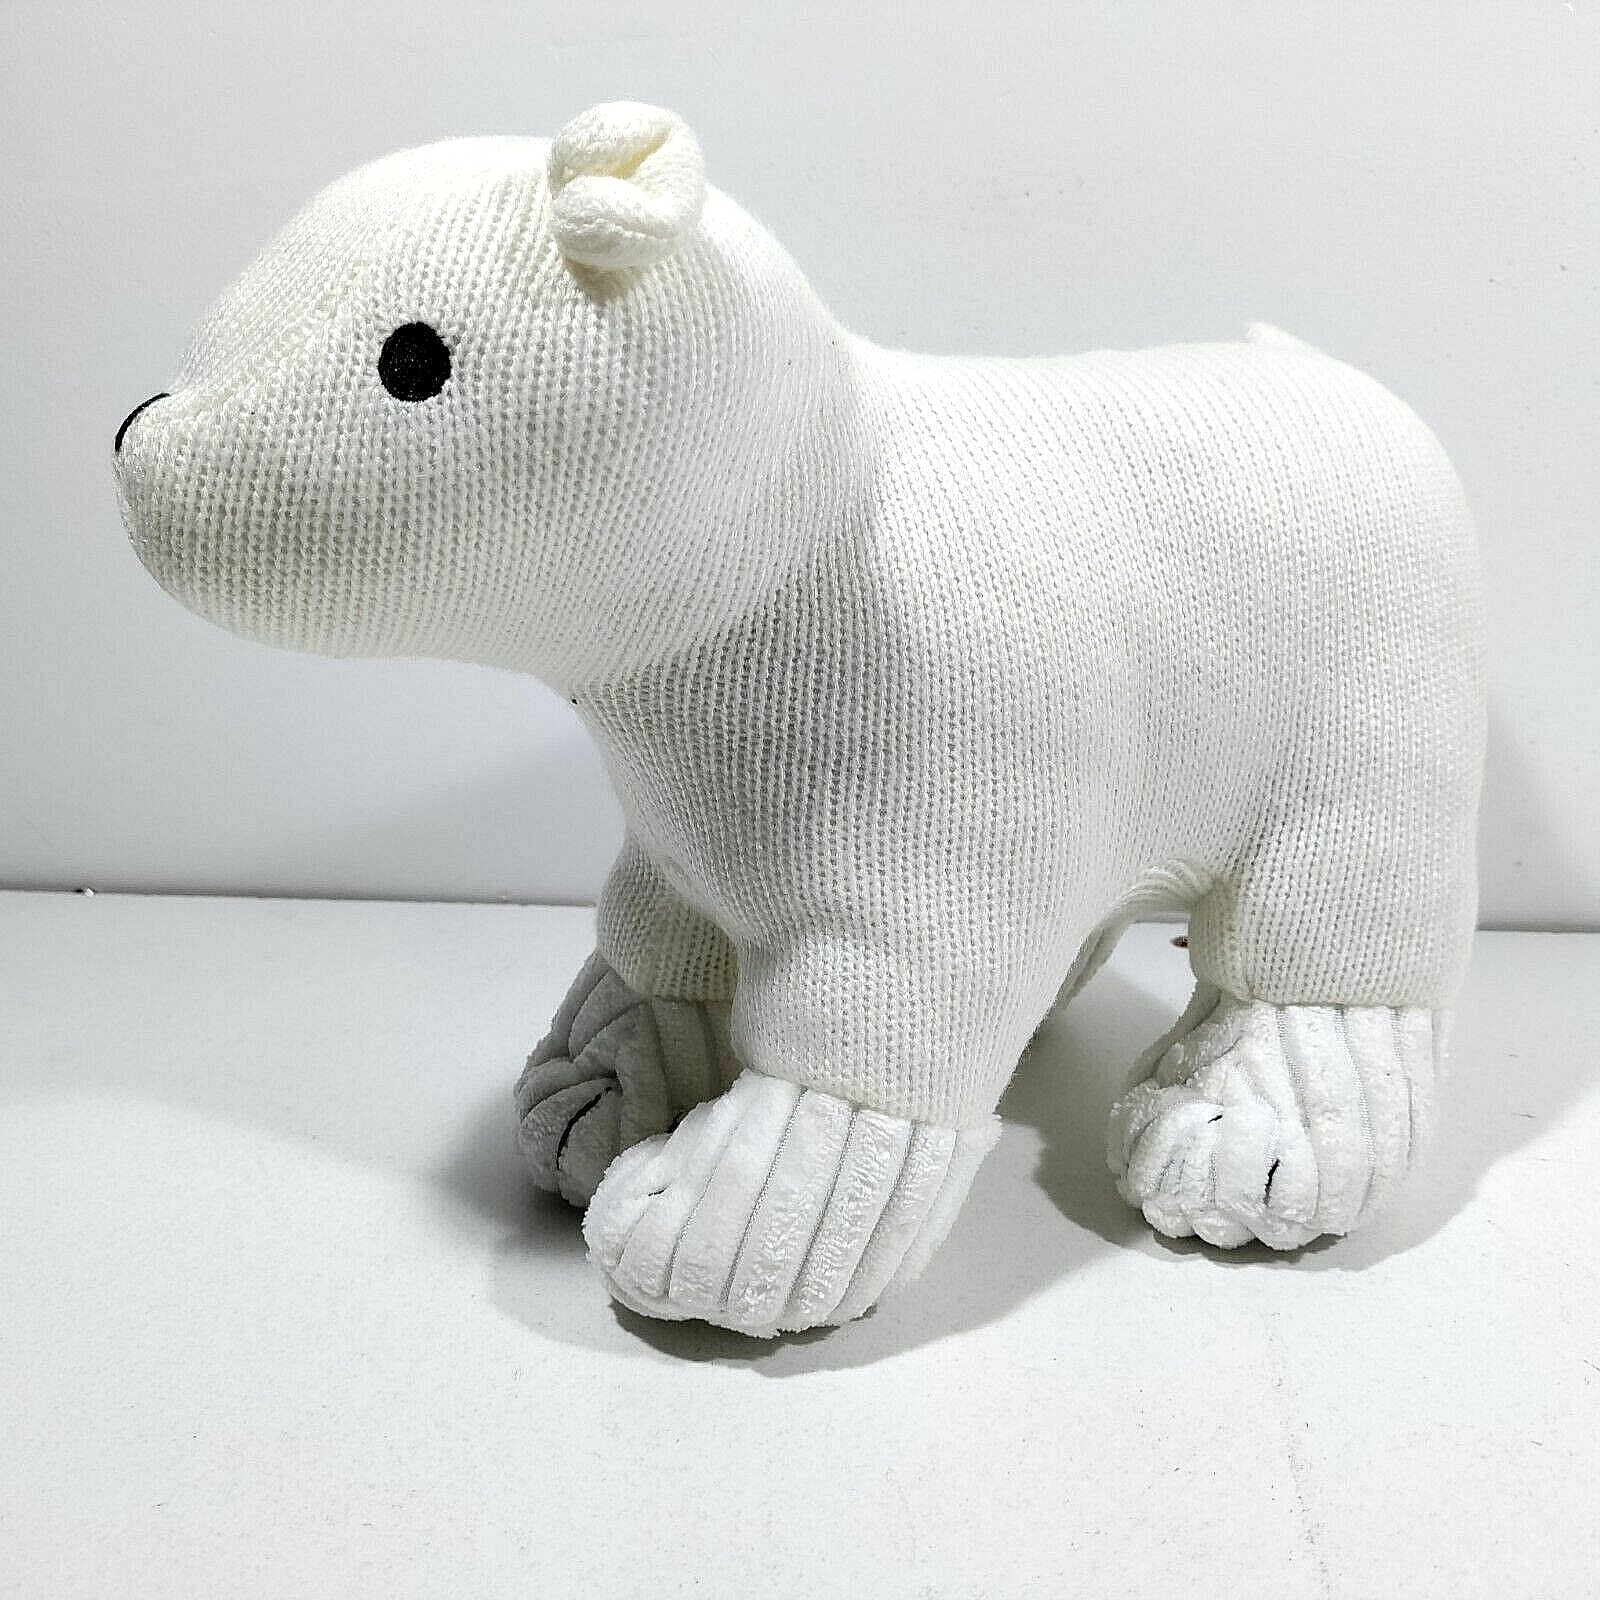 Polar Bear Plush Knitted Stuffed Animal 8" Tall White Toy - $17.82